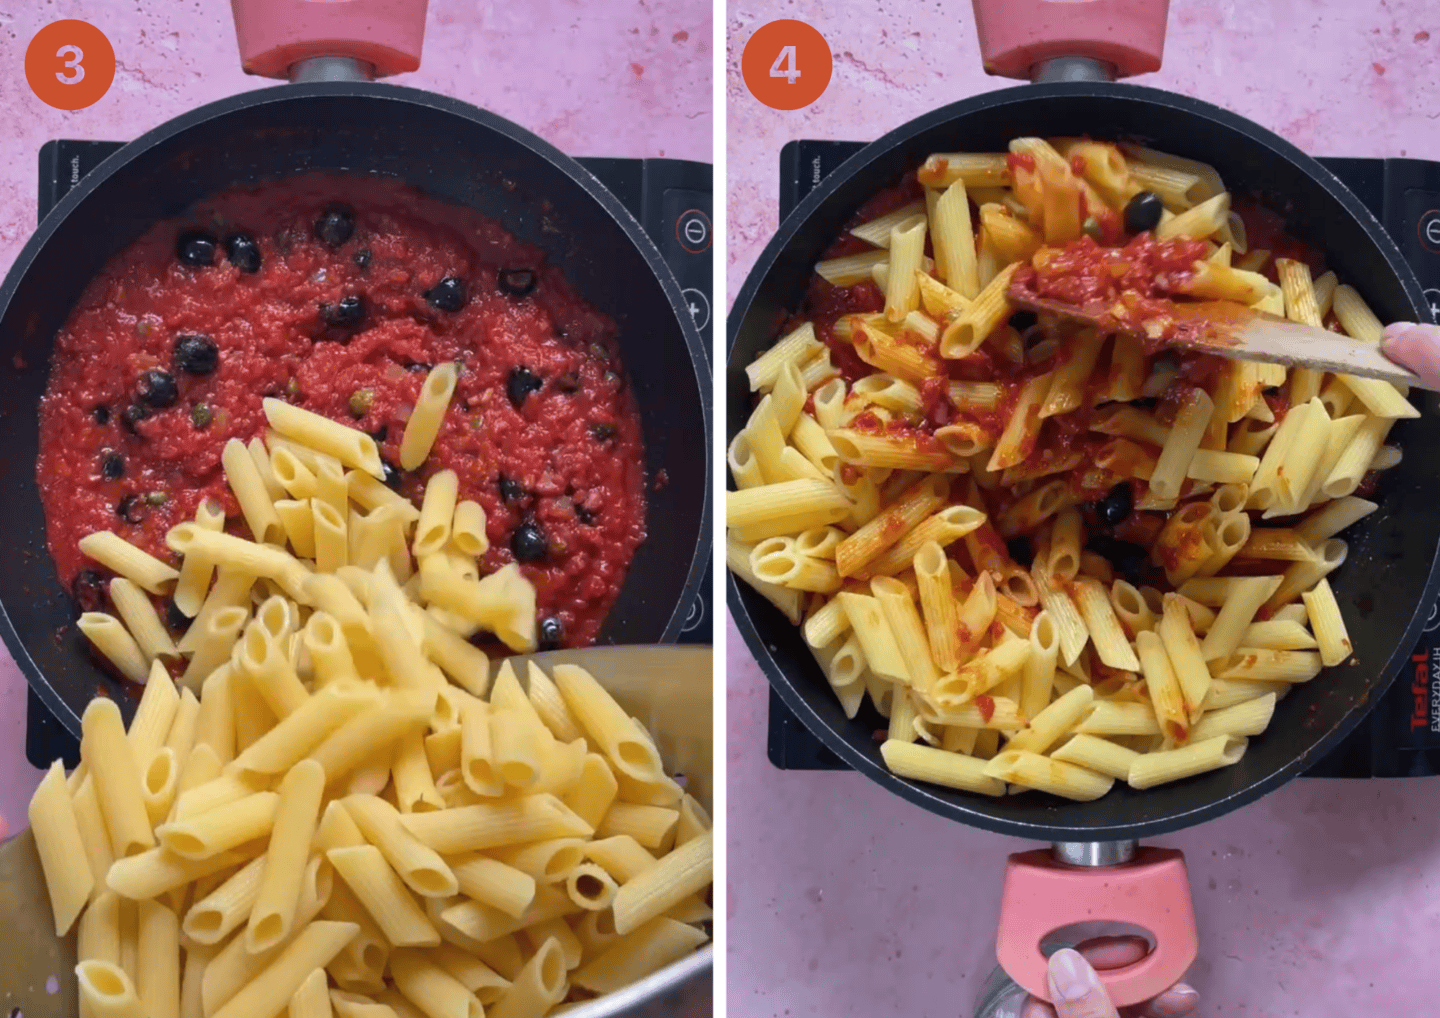 Adding the gluten free pasta to the puttanesca sauce.